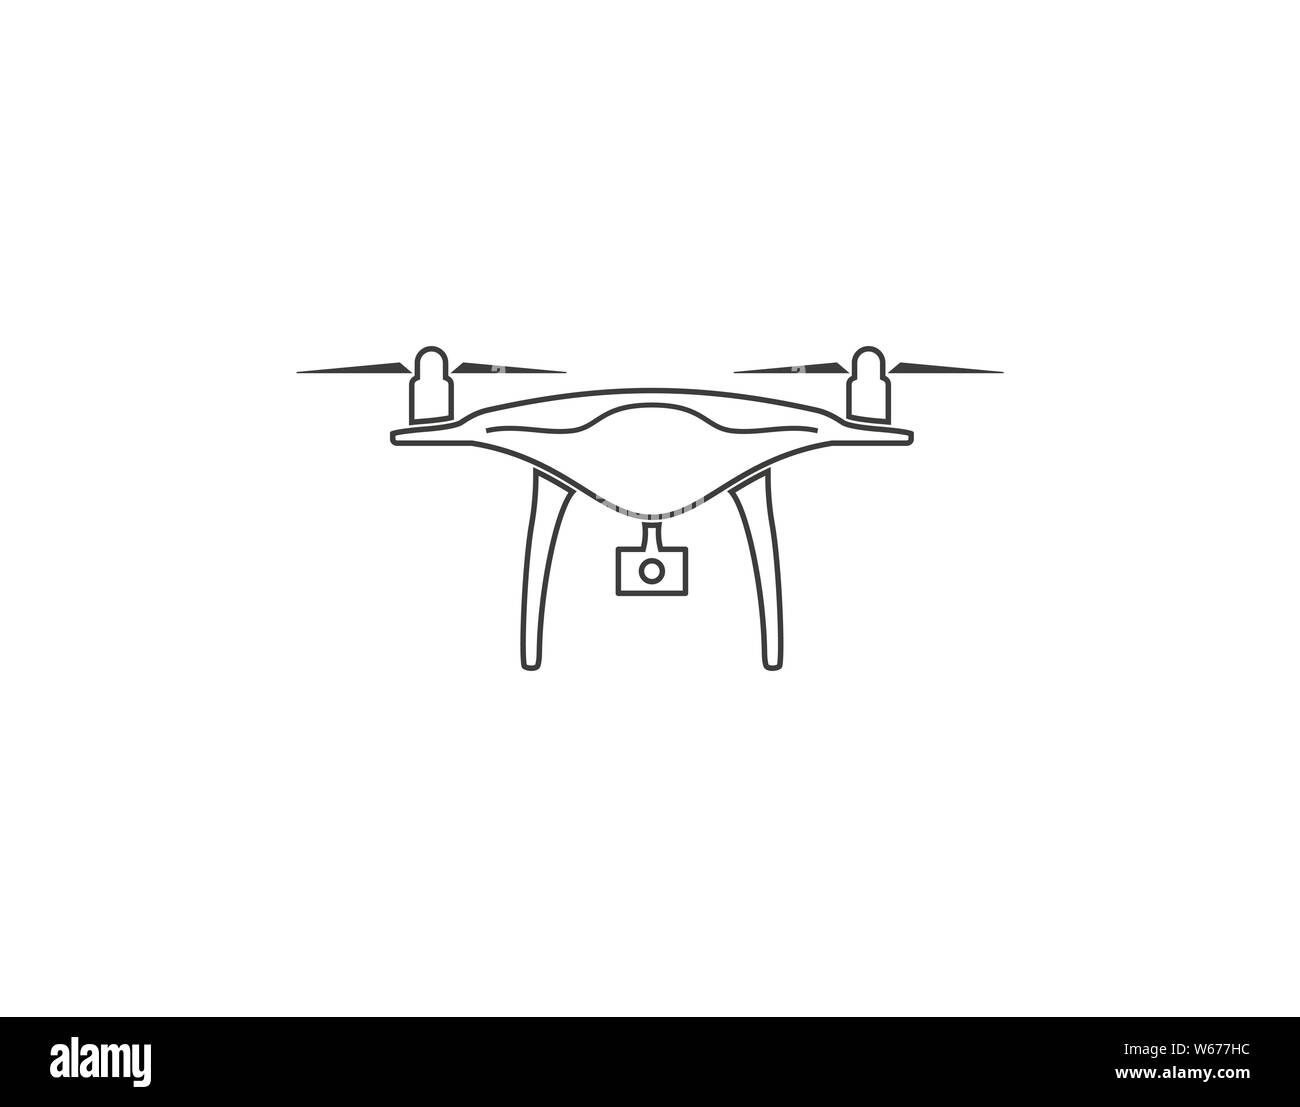 Vector illustration, flat design. Drone quadrocopter icon Stock Vector